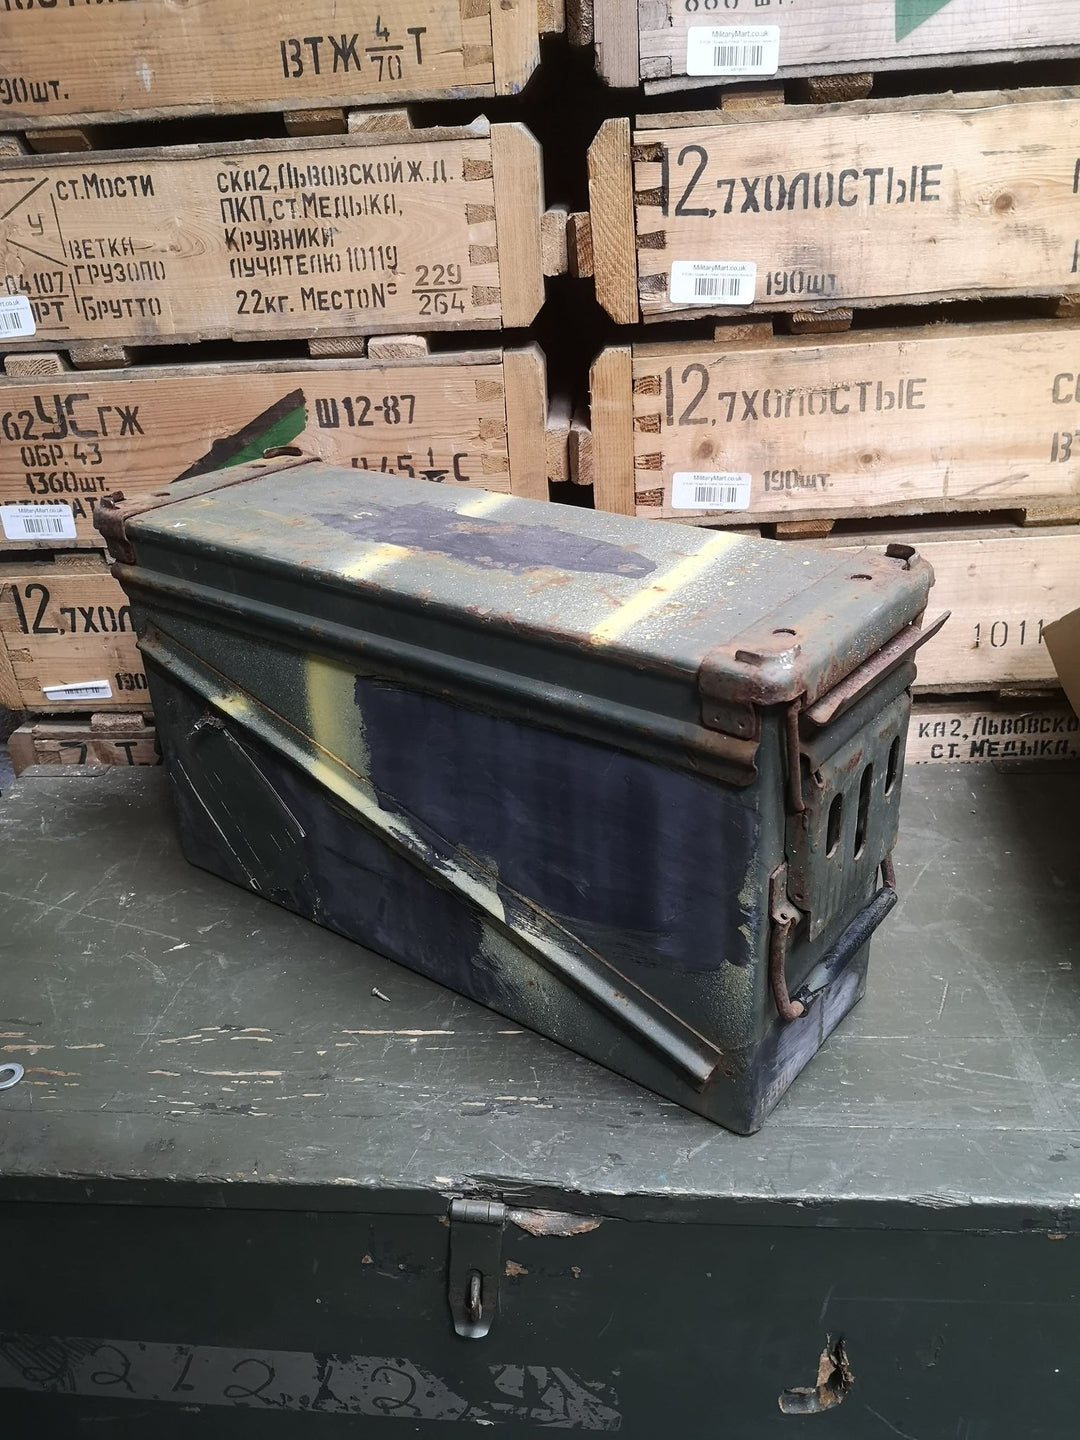 Ammo Boxes for Sale  Military Storage Boxes UK – MilitaryMart